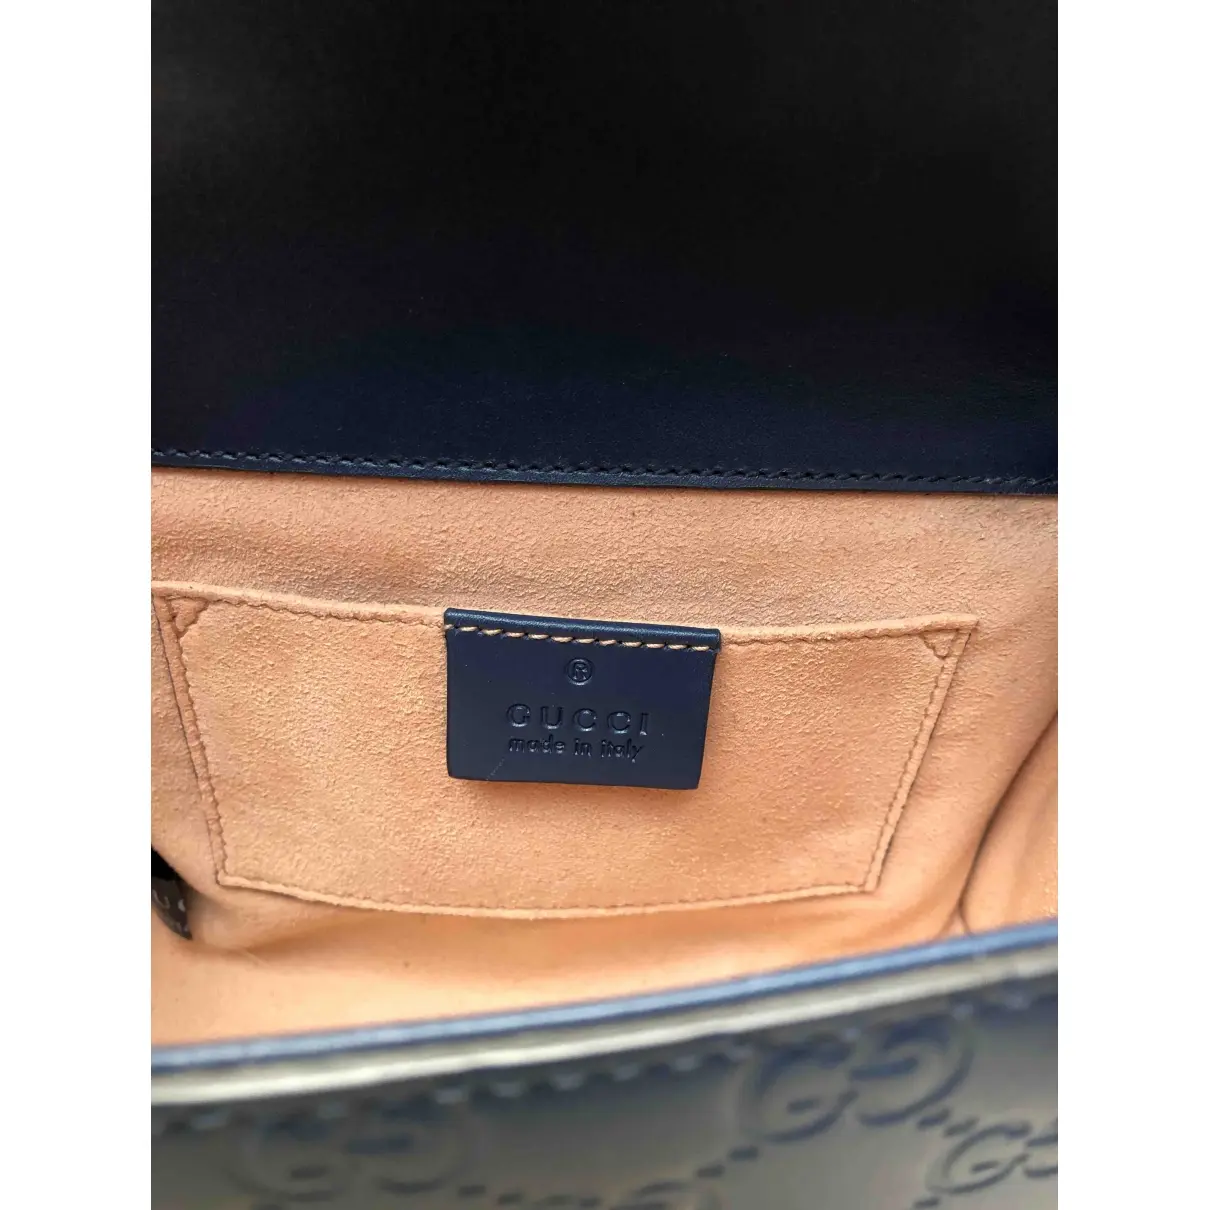 Buy Gucci Padlock leather handbag online